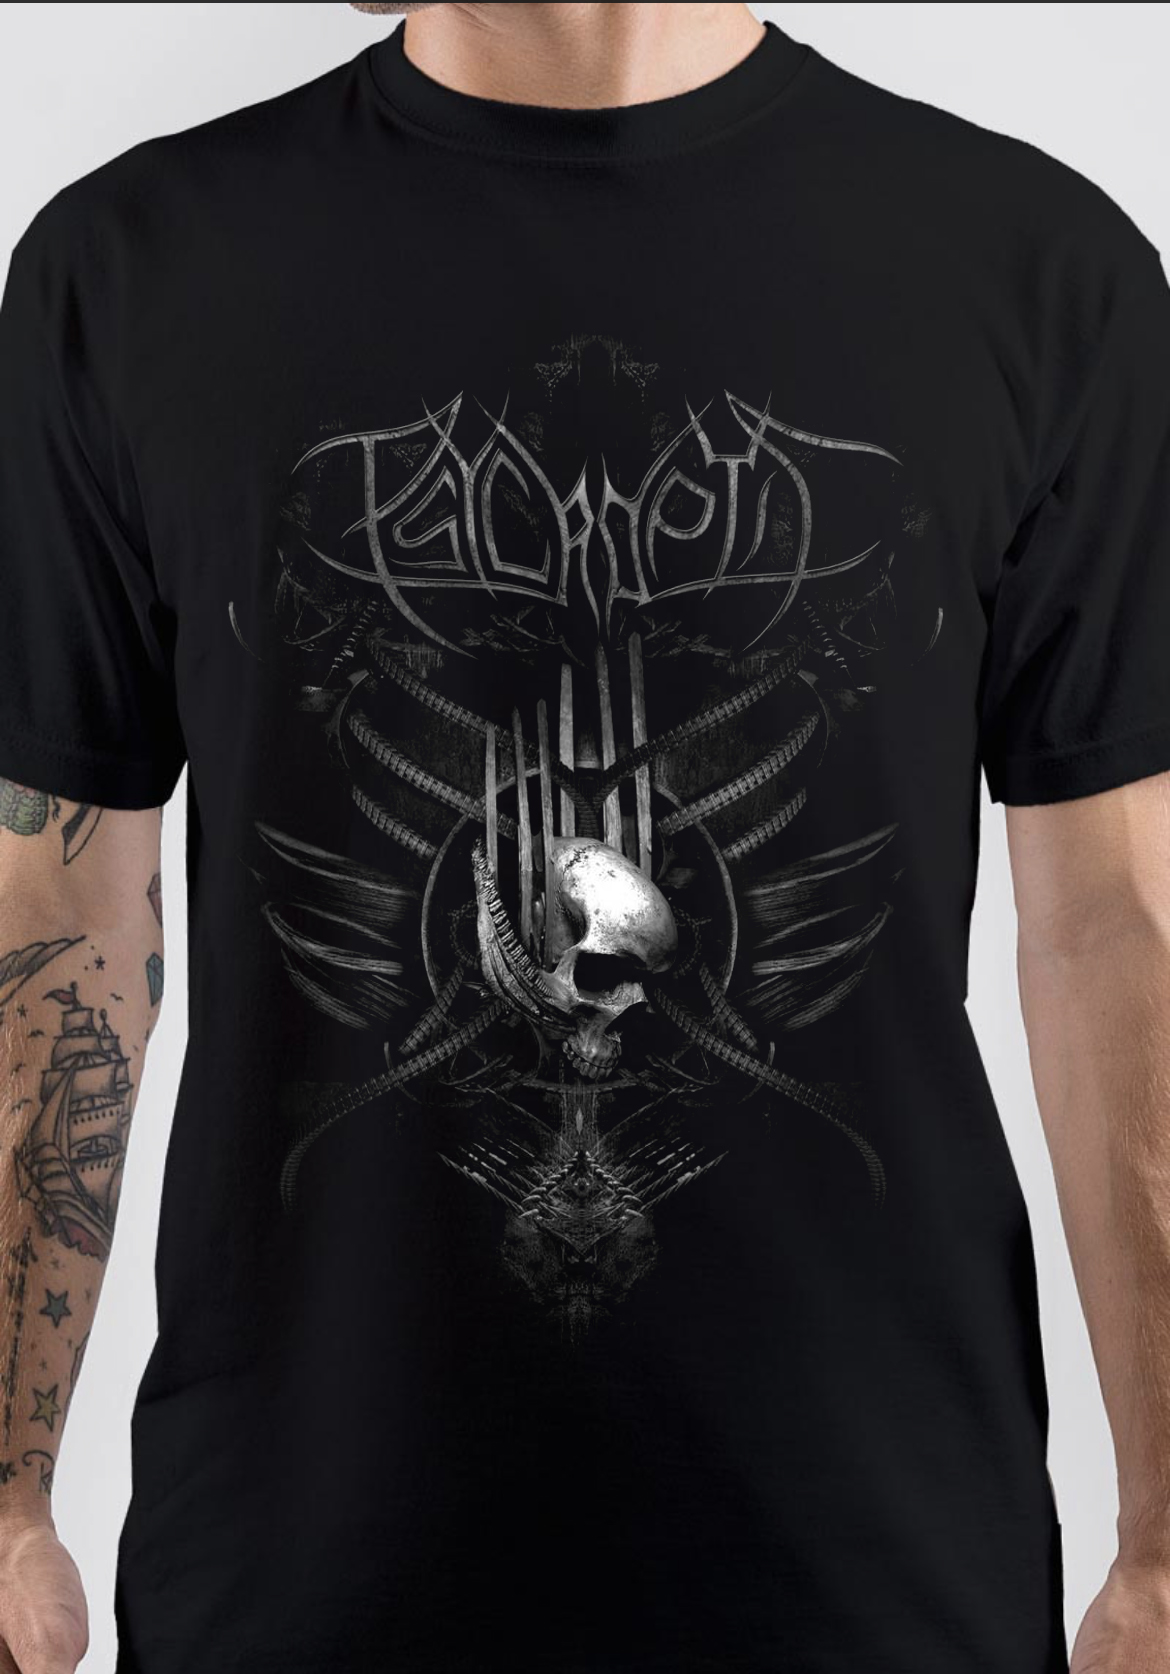 Psycroptic T-Shirt And Merchandise